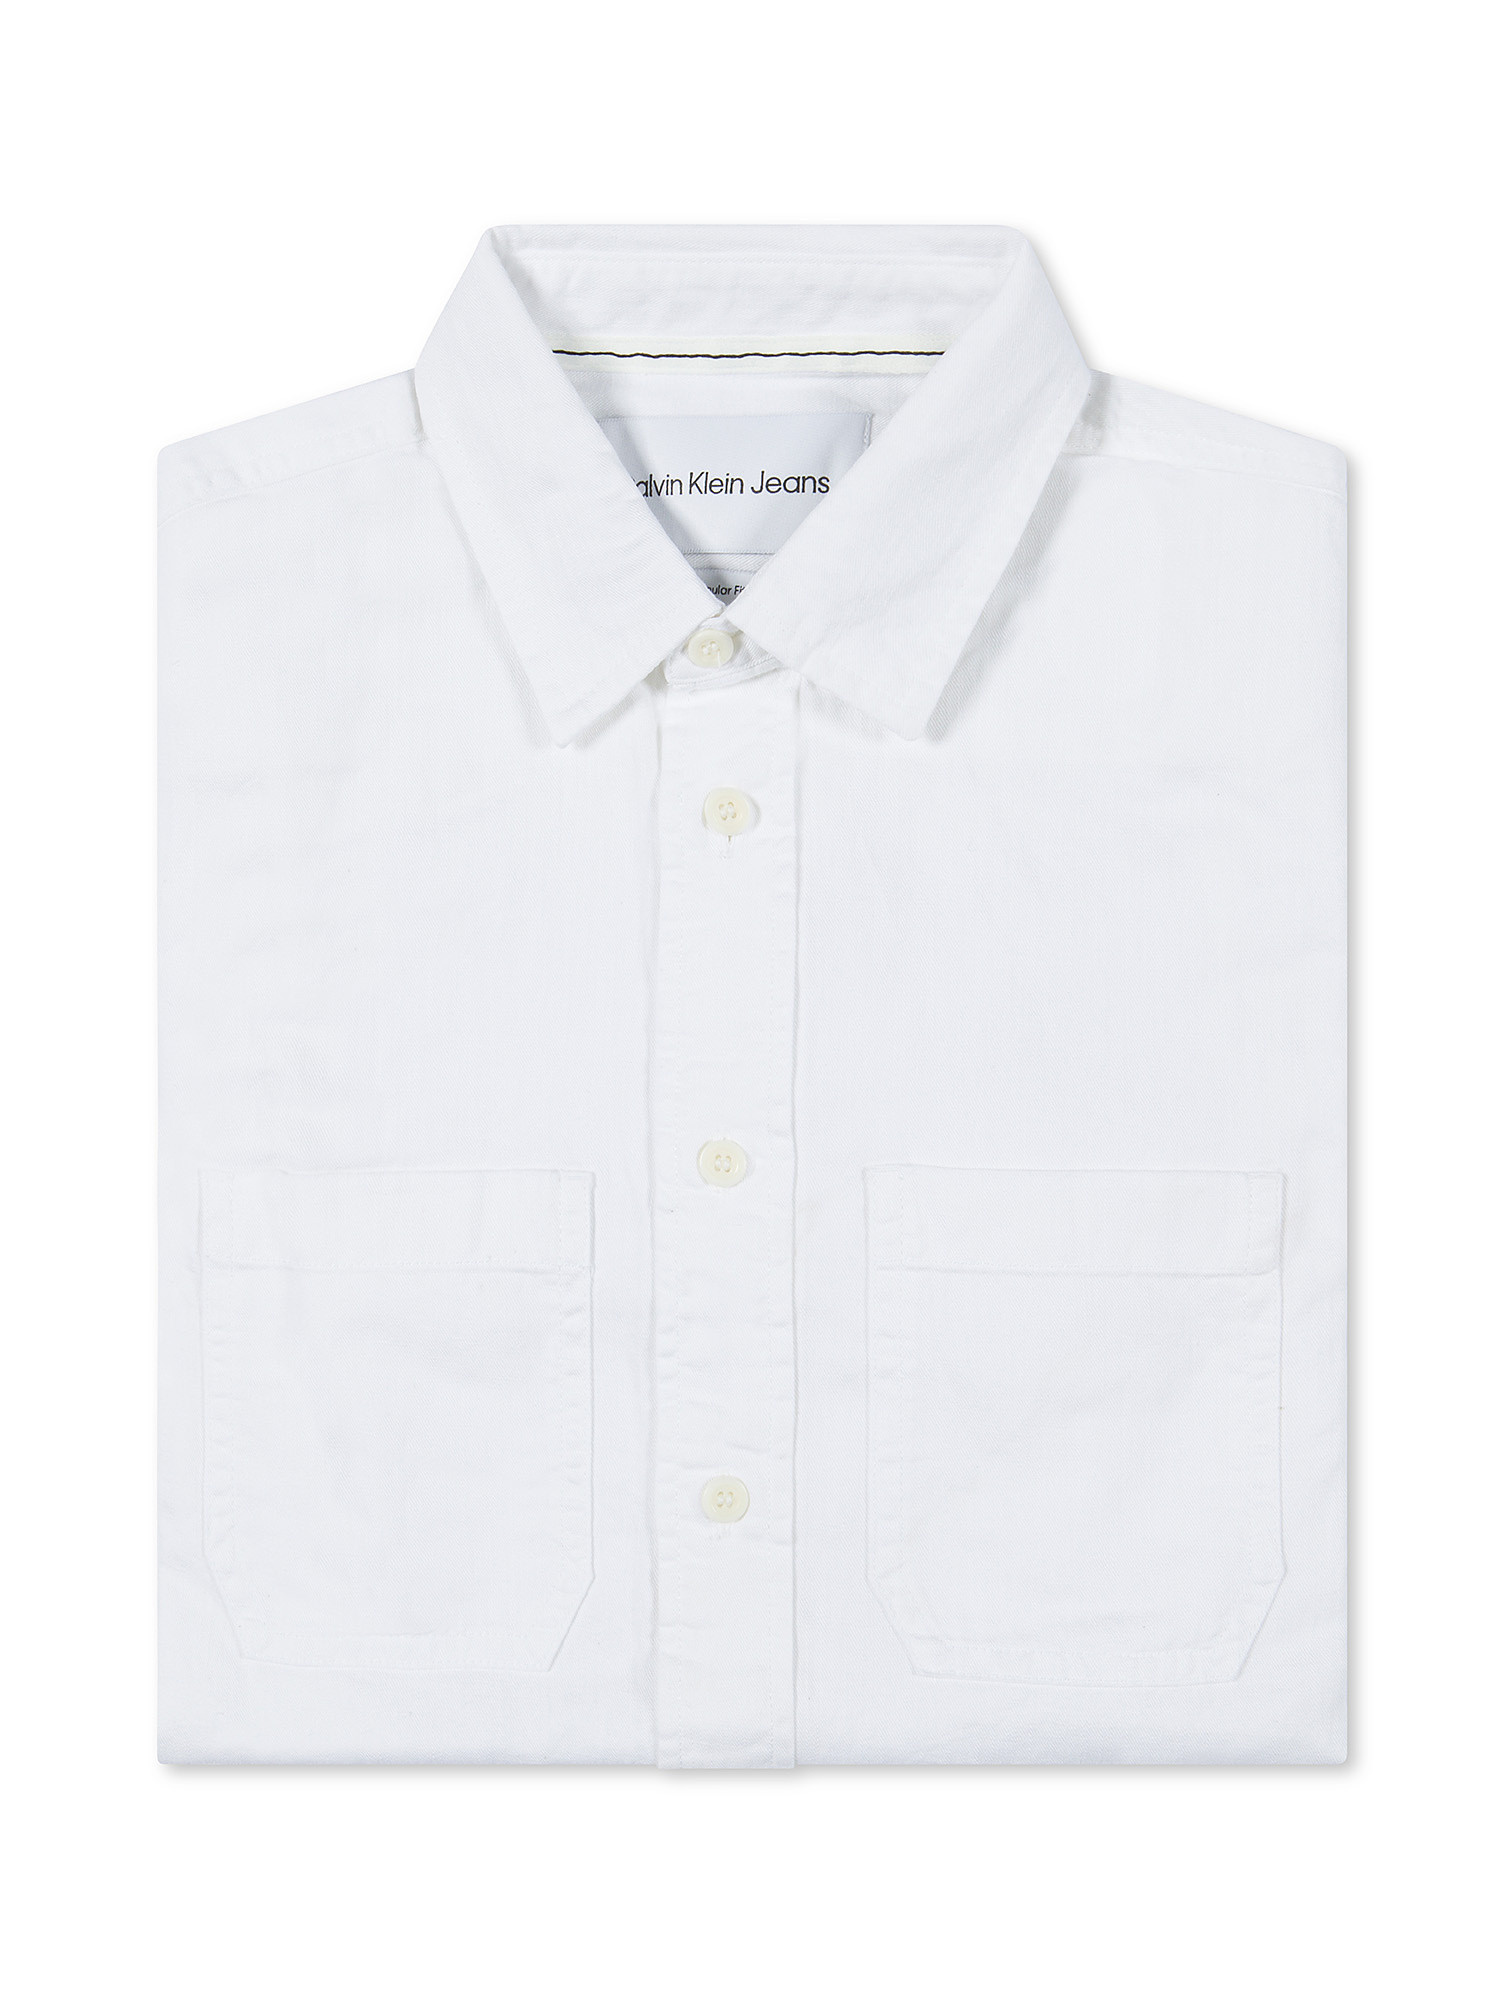 Calvin Klein Jeans - Camicia con doppia tasca, Bianco, large image number 2